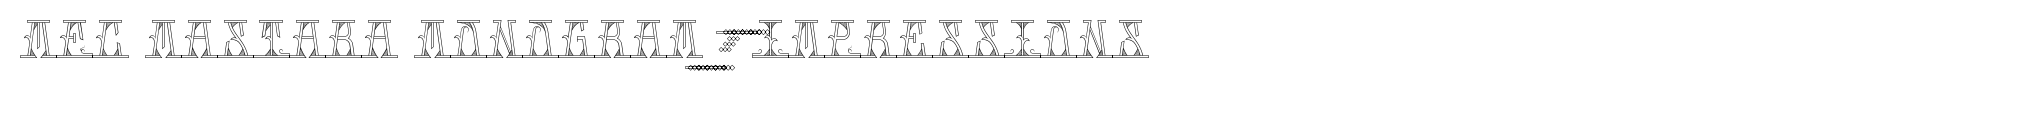 MFC Mastaba Monogram 1000 Impressions image